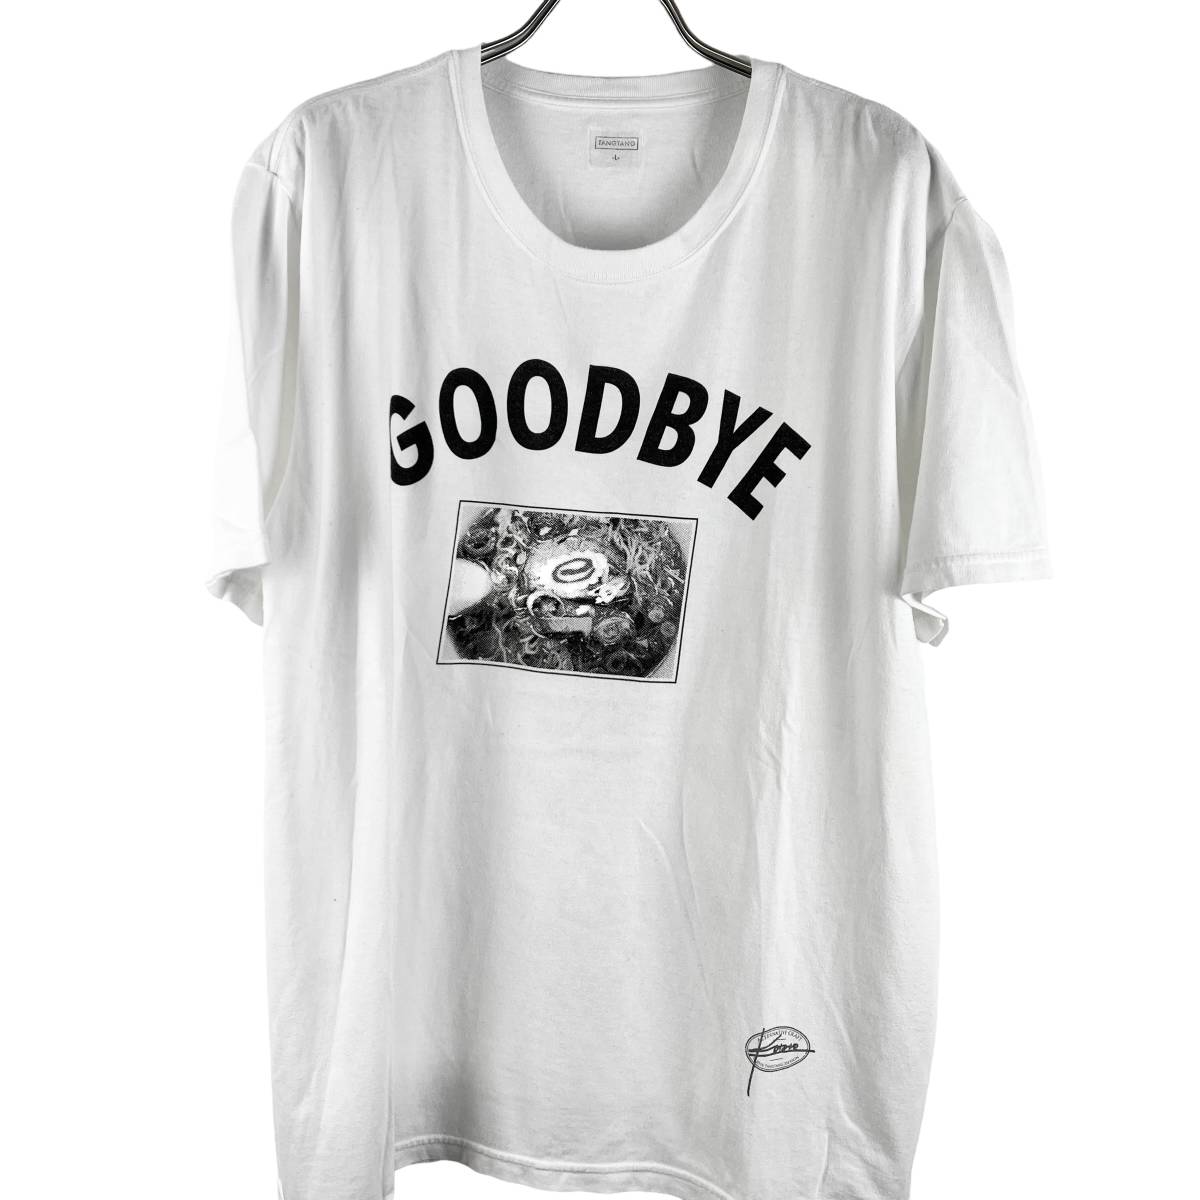 TANGTANG DESIGN(タンタンデザイン) GOODBYE Print Shortsleeve T Shirt (white)